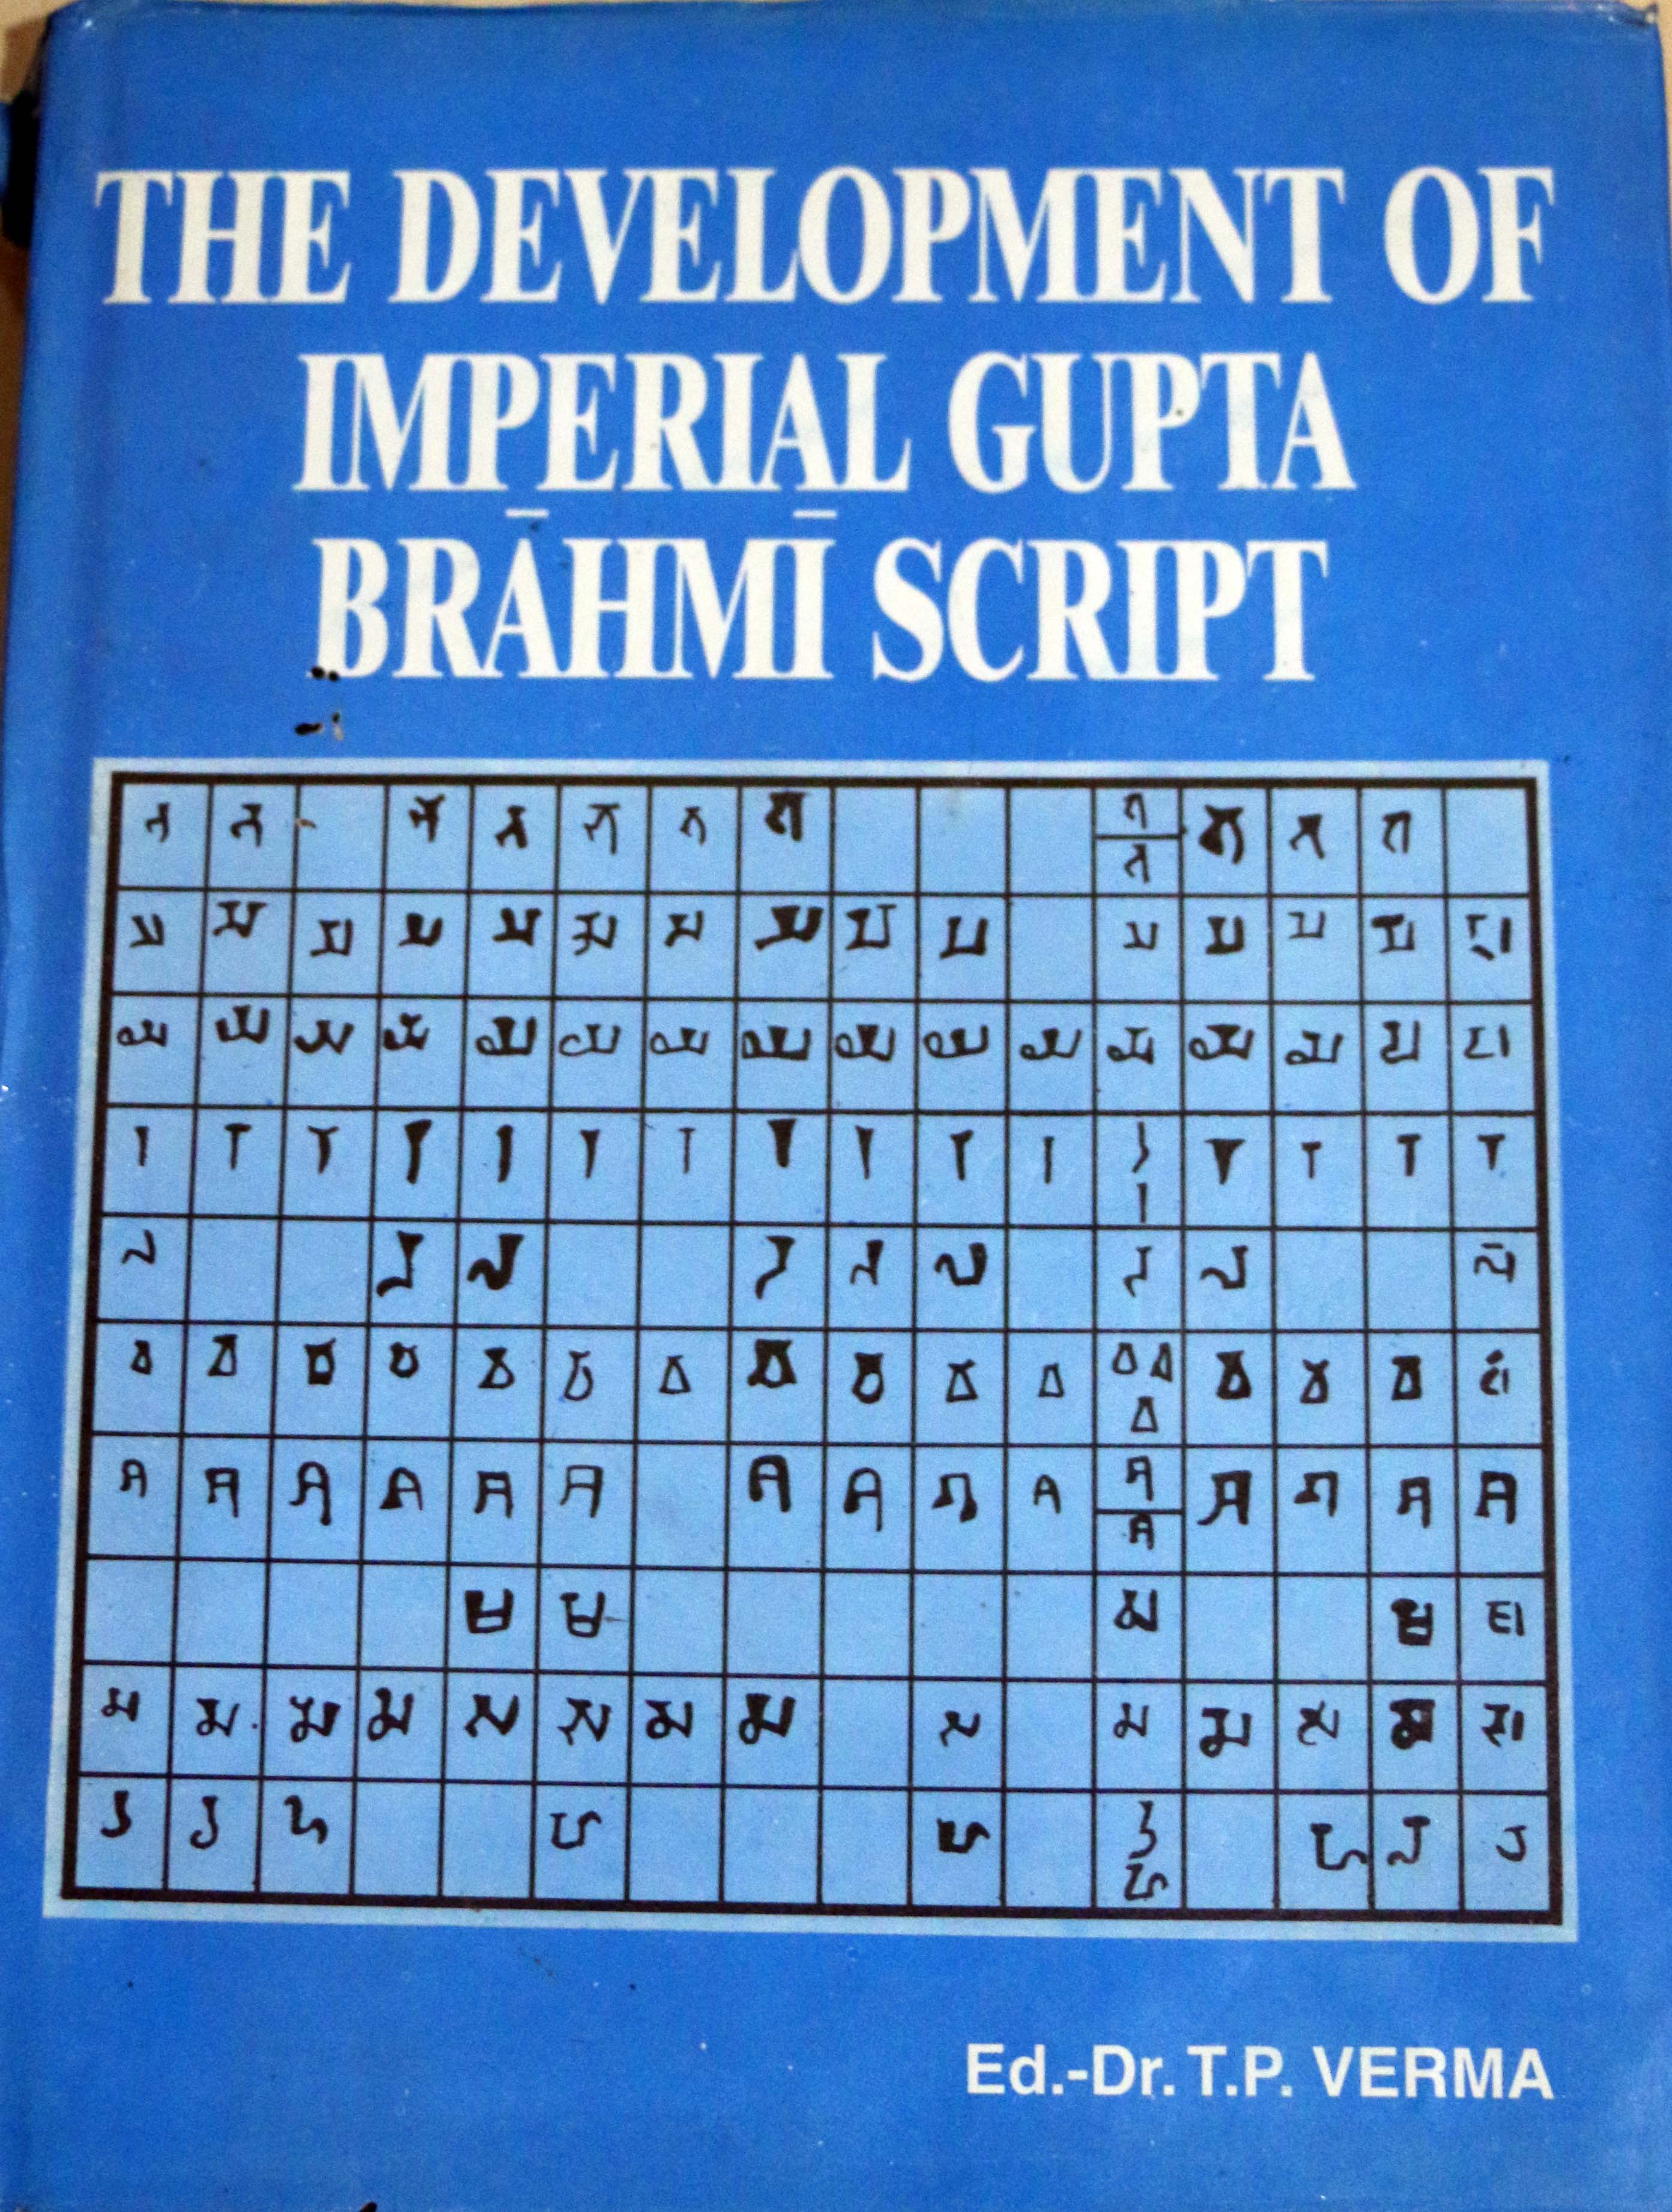 The Development of Imperial Gupta Brahmi Script